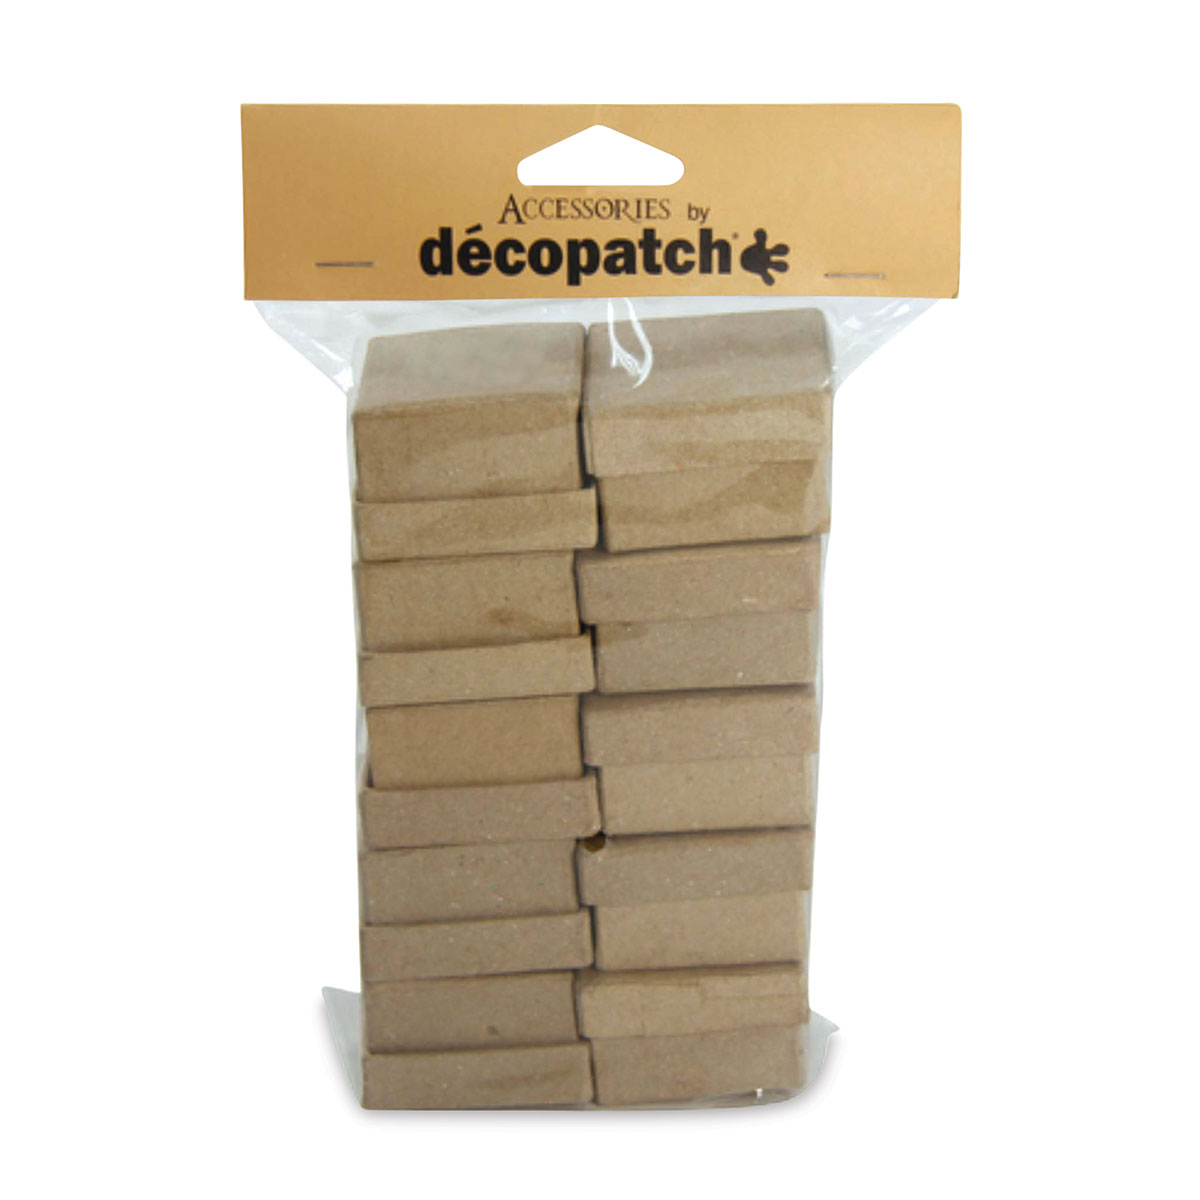 DecoPatch Paper Mache Boxes | BLICK Art Materials